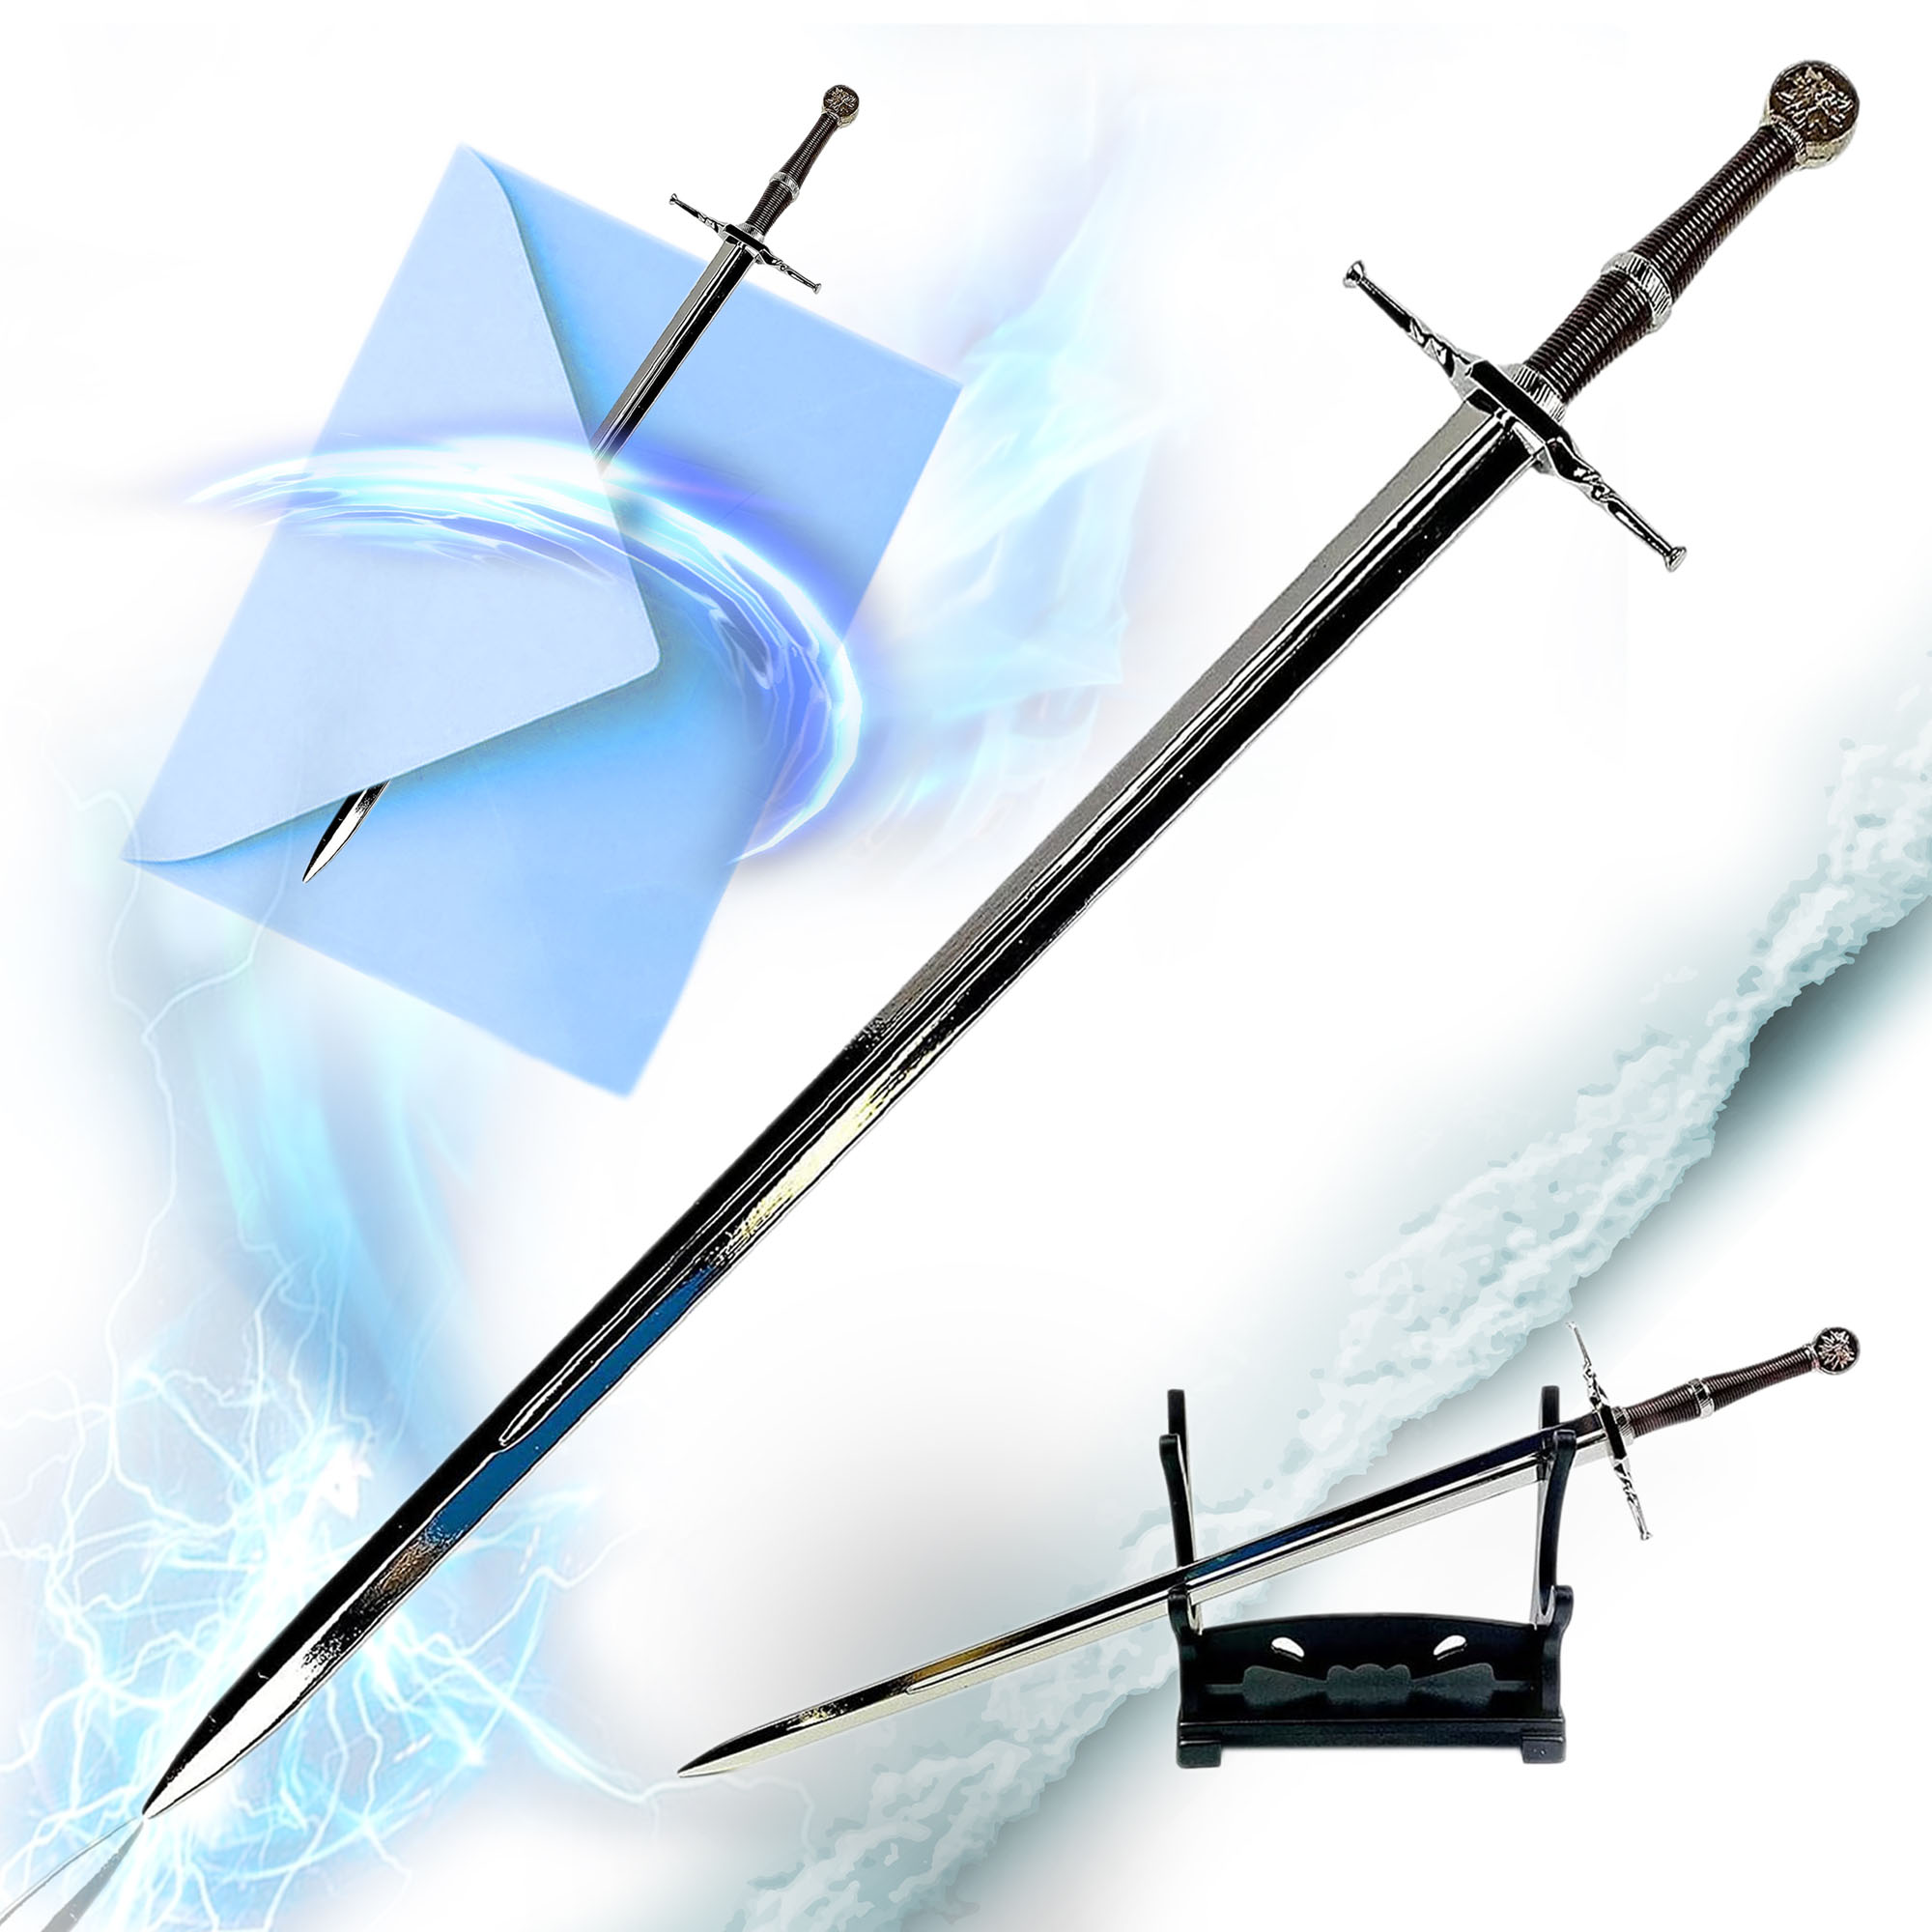 The Witcher - Geralt of Rivia Steel Sword, Letter Opener Sword  with Stand 21.6cm, Miniature Sword Game